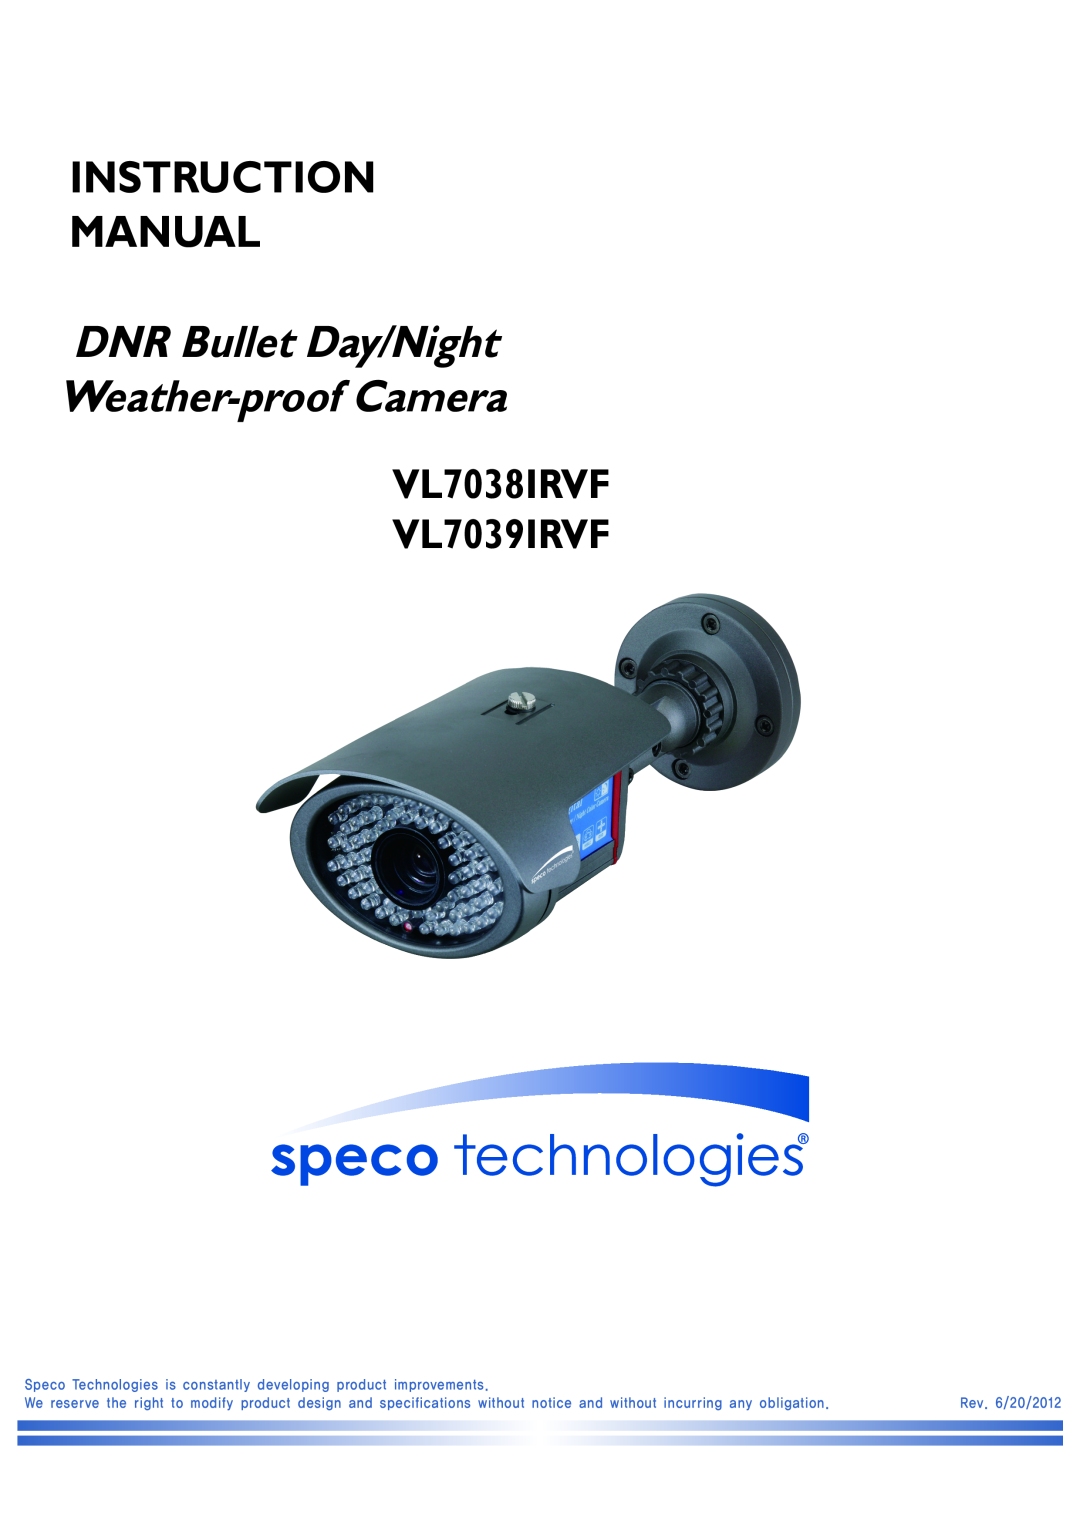 Speco Technologies instruction manual DNR Bullet Day/Night Weather-proof Camera, VL7038IRVF VL7039IRVF, Rev. 6/20/2012 